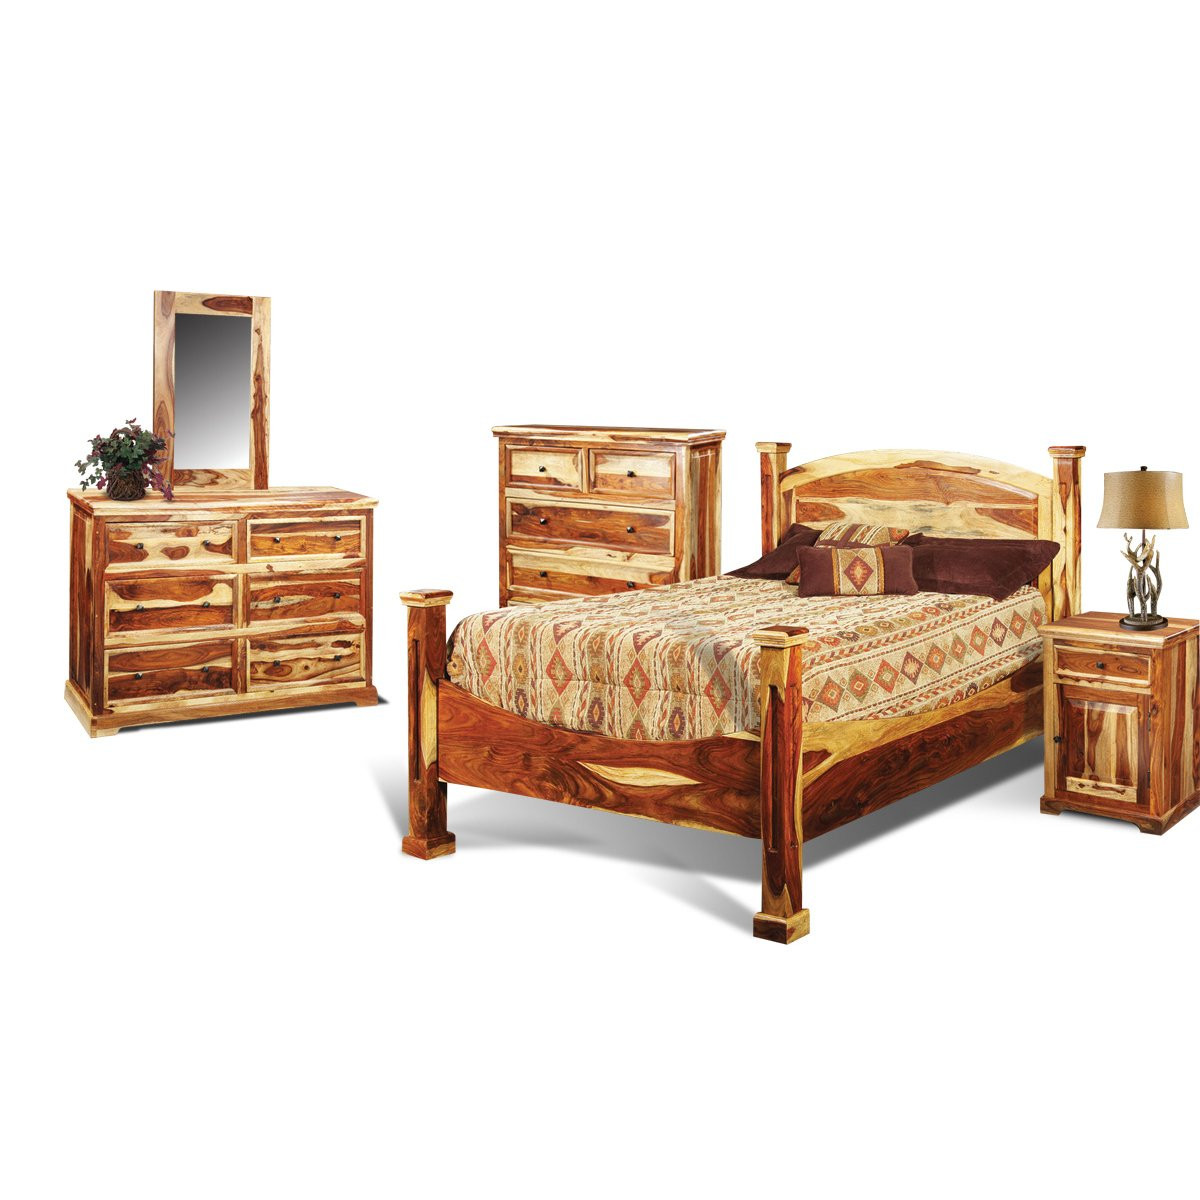 Rustic King Bedroom Set
 Tahoe Pine Rustic 6 Piece King Bedroom Set